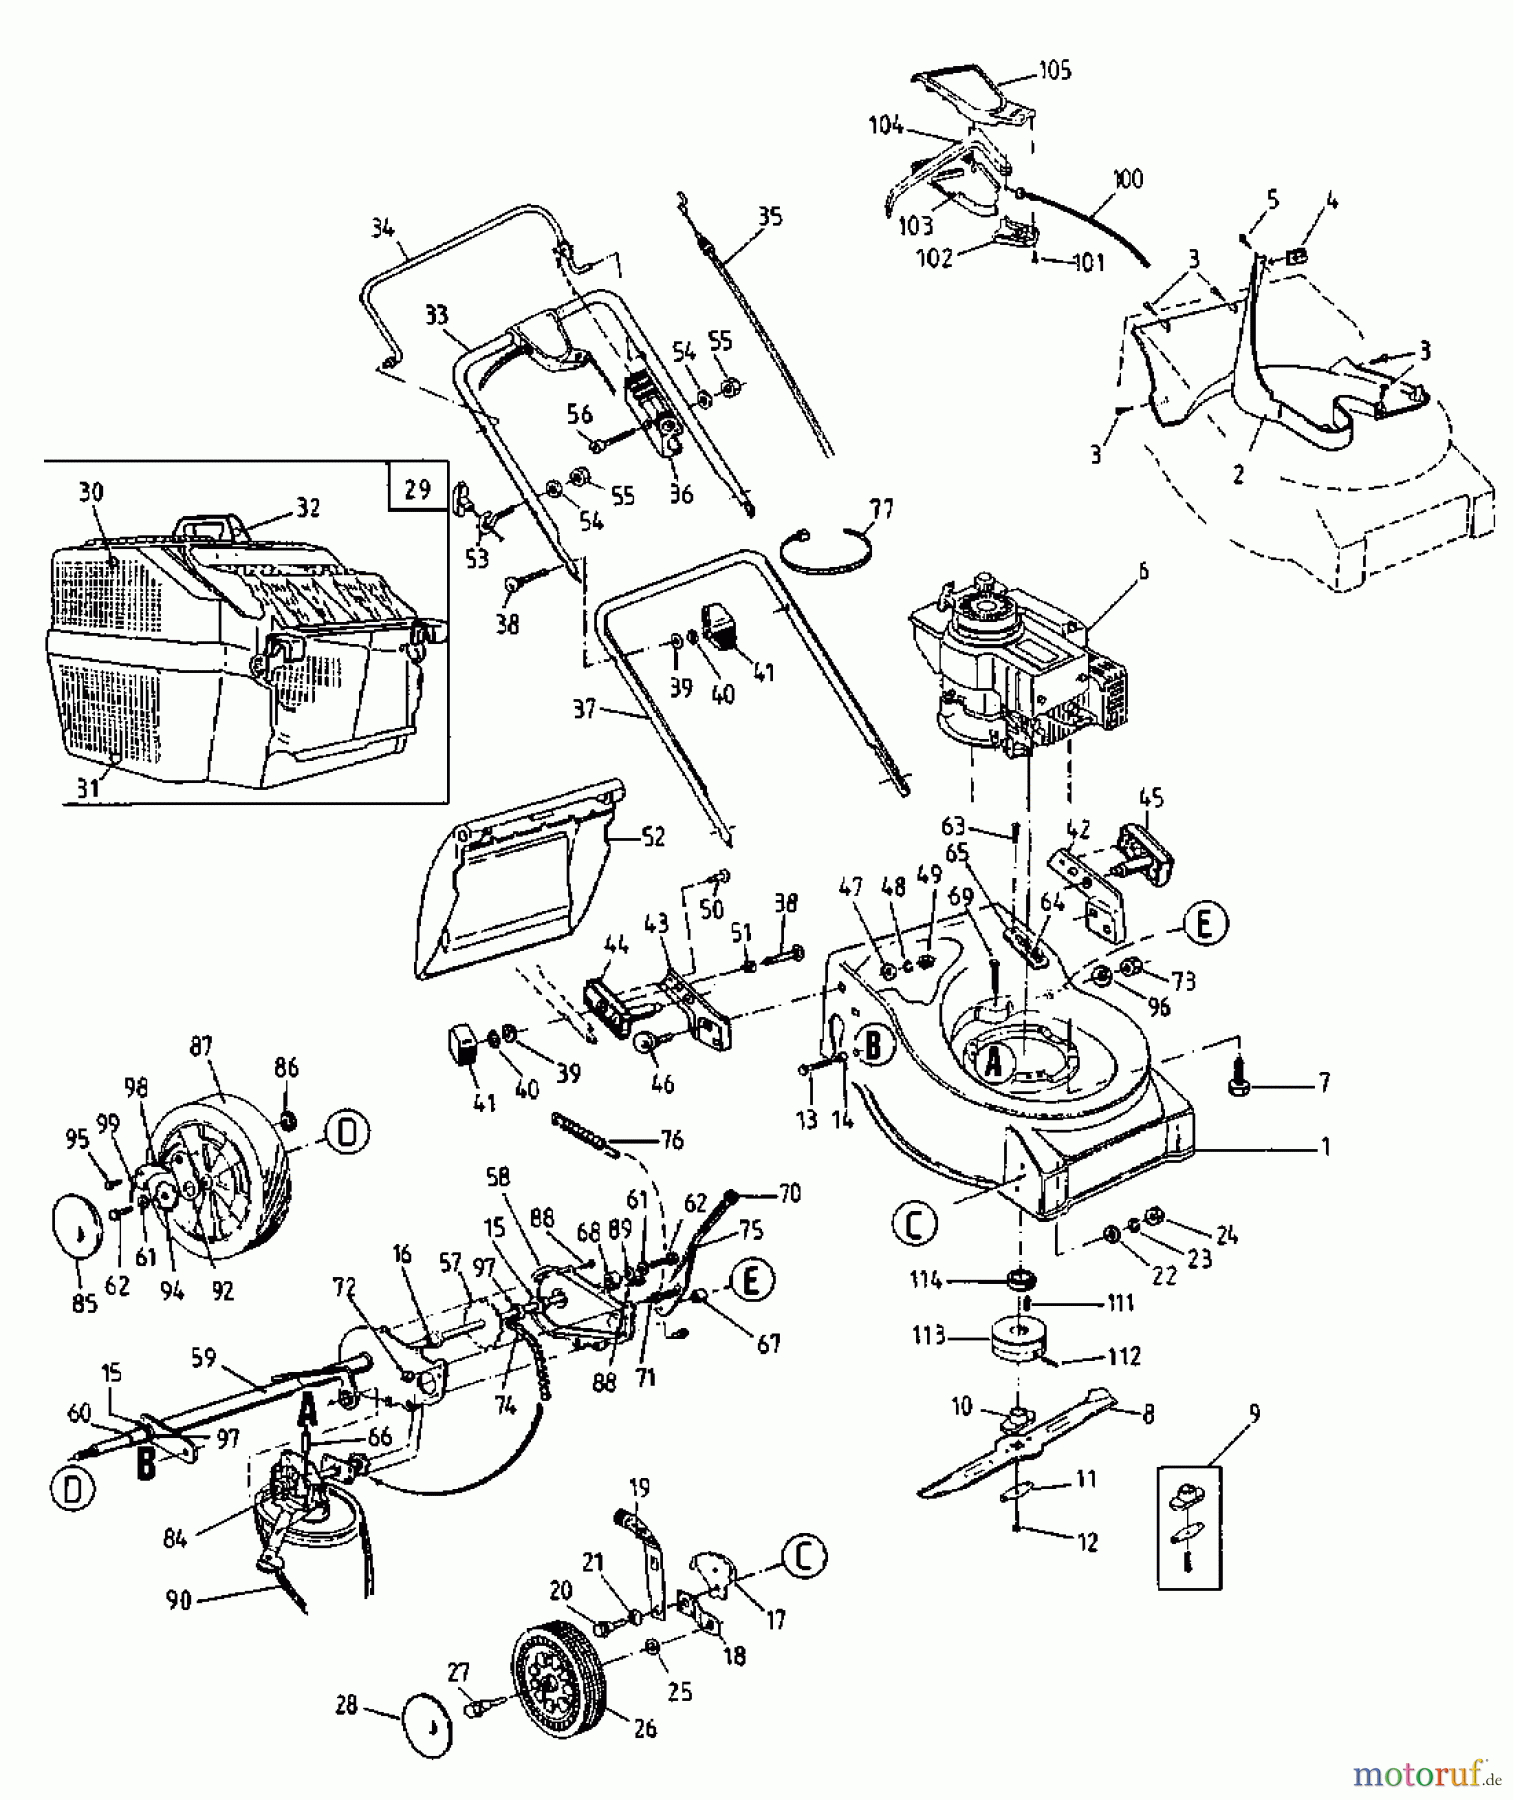  Mastercut Motormäher mit Antrieb GS 46 12C-682A659  (2000) Grundgerät